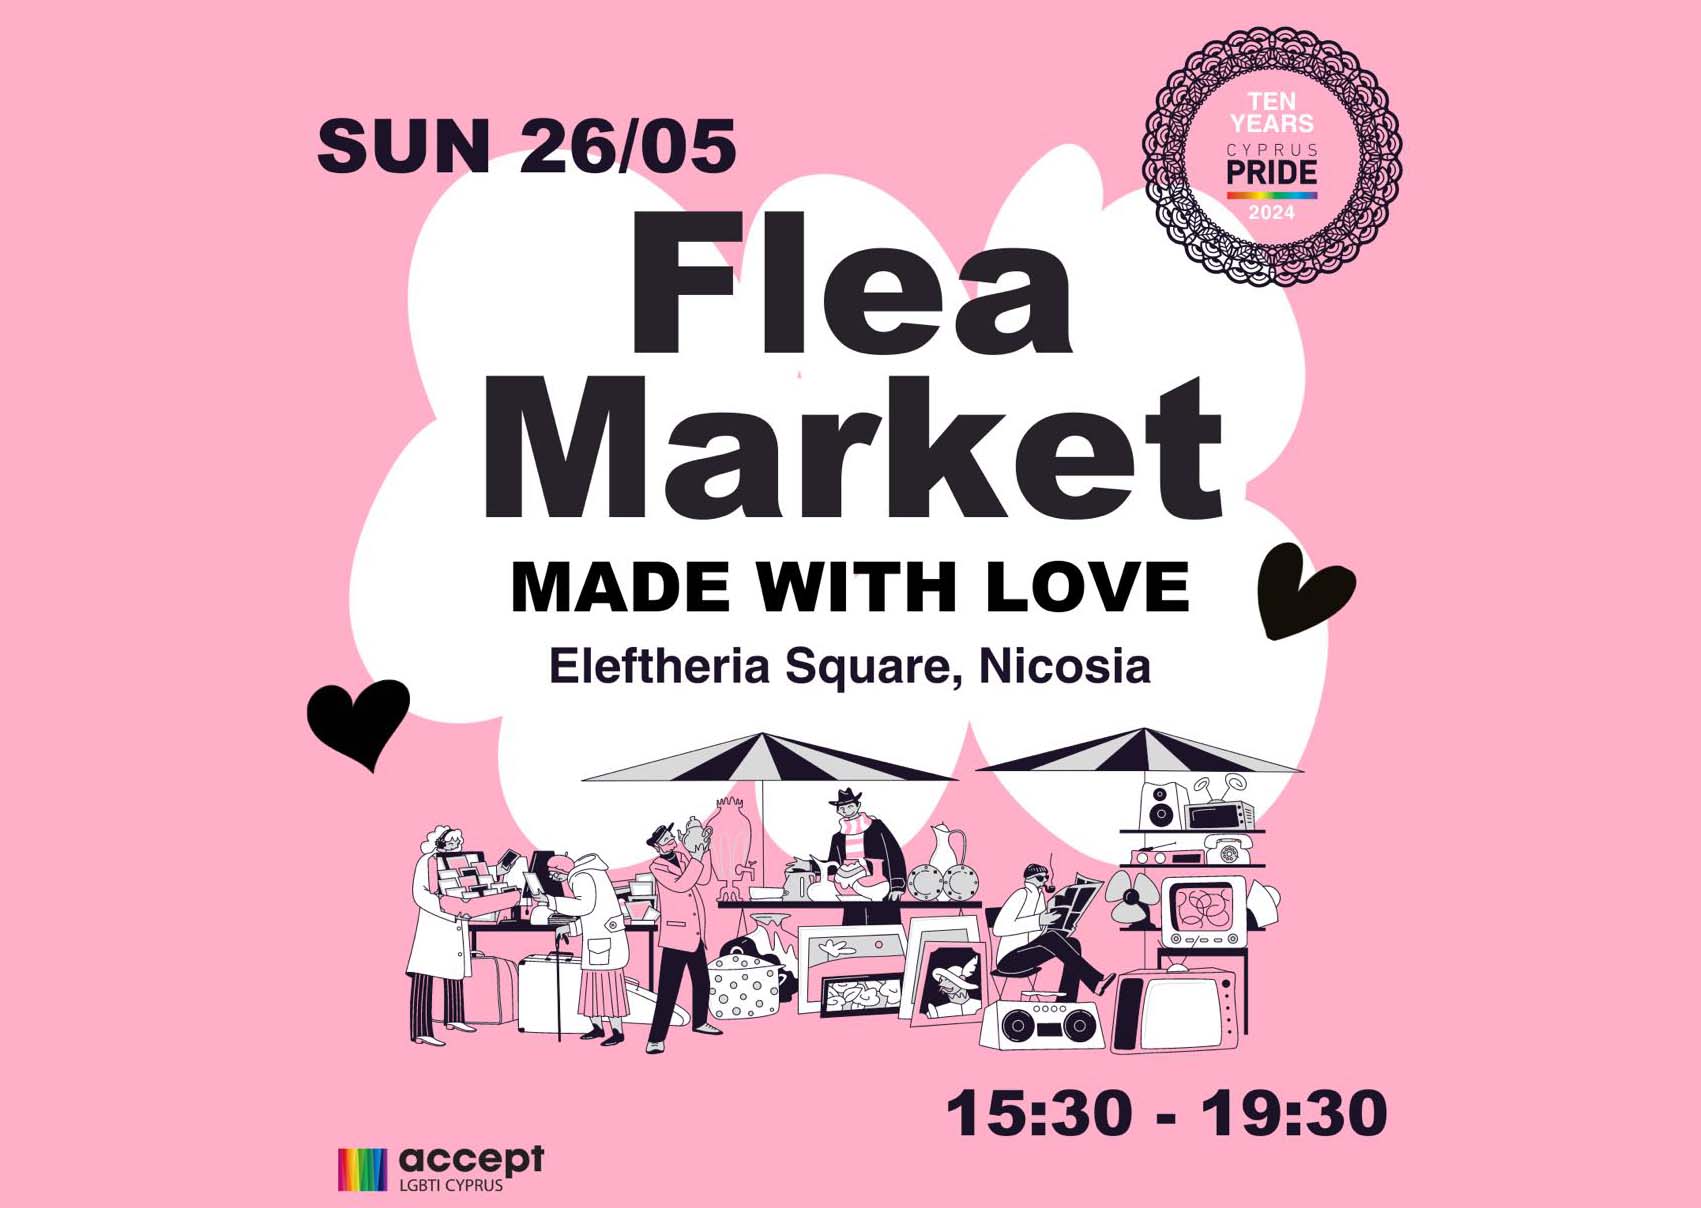 Made with Love: Pride flea market